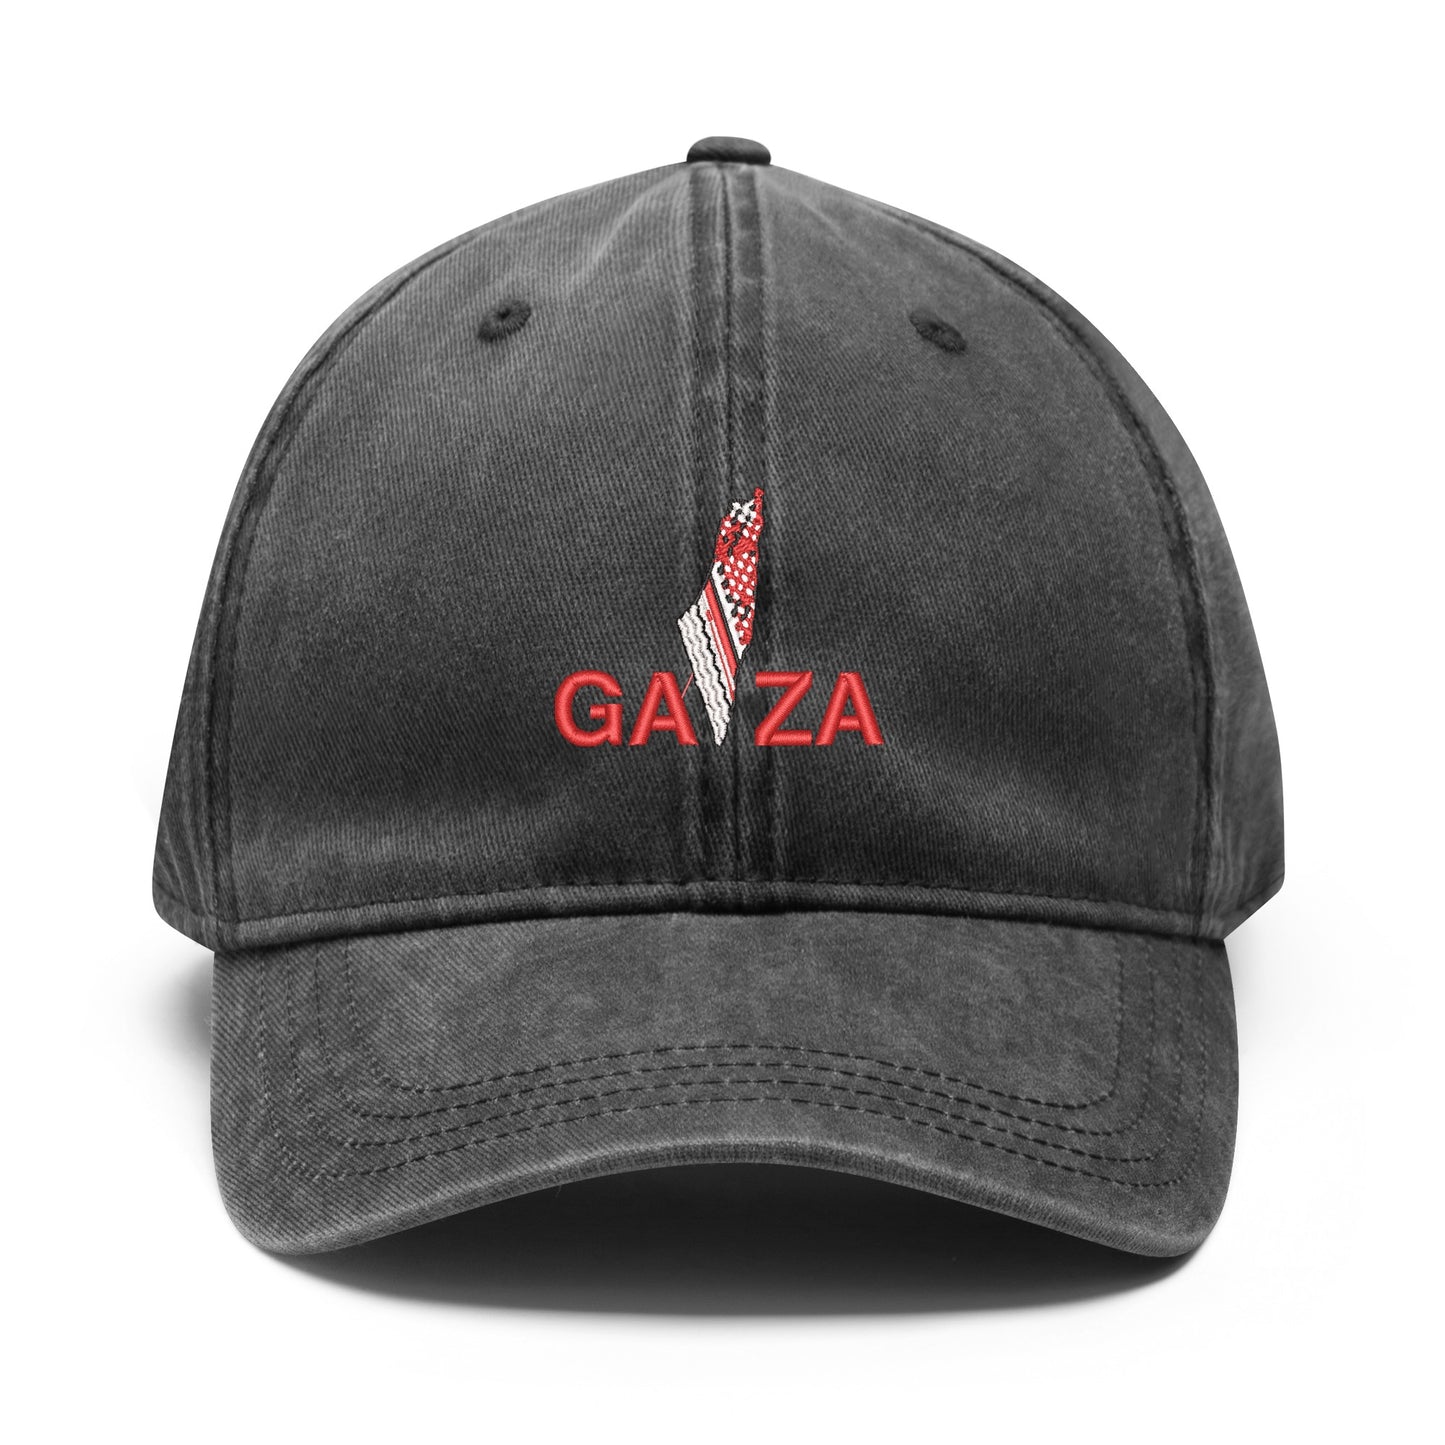 Gaza Embroidered Denim Baseball Cap